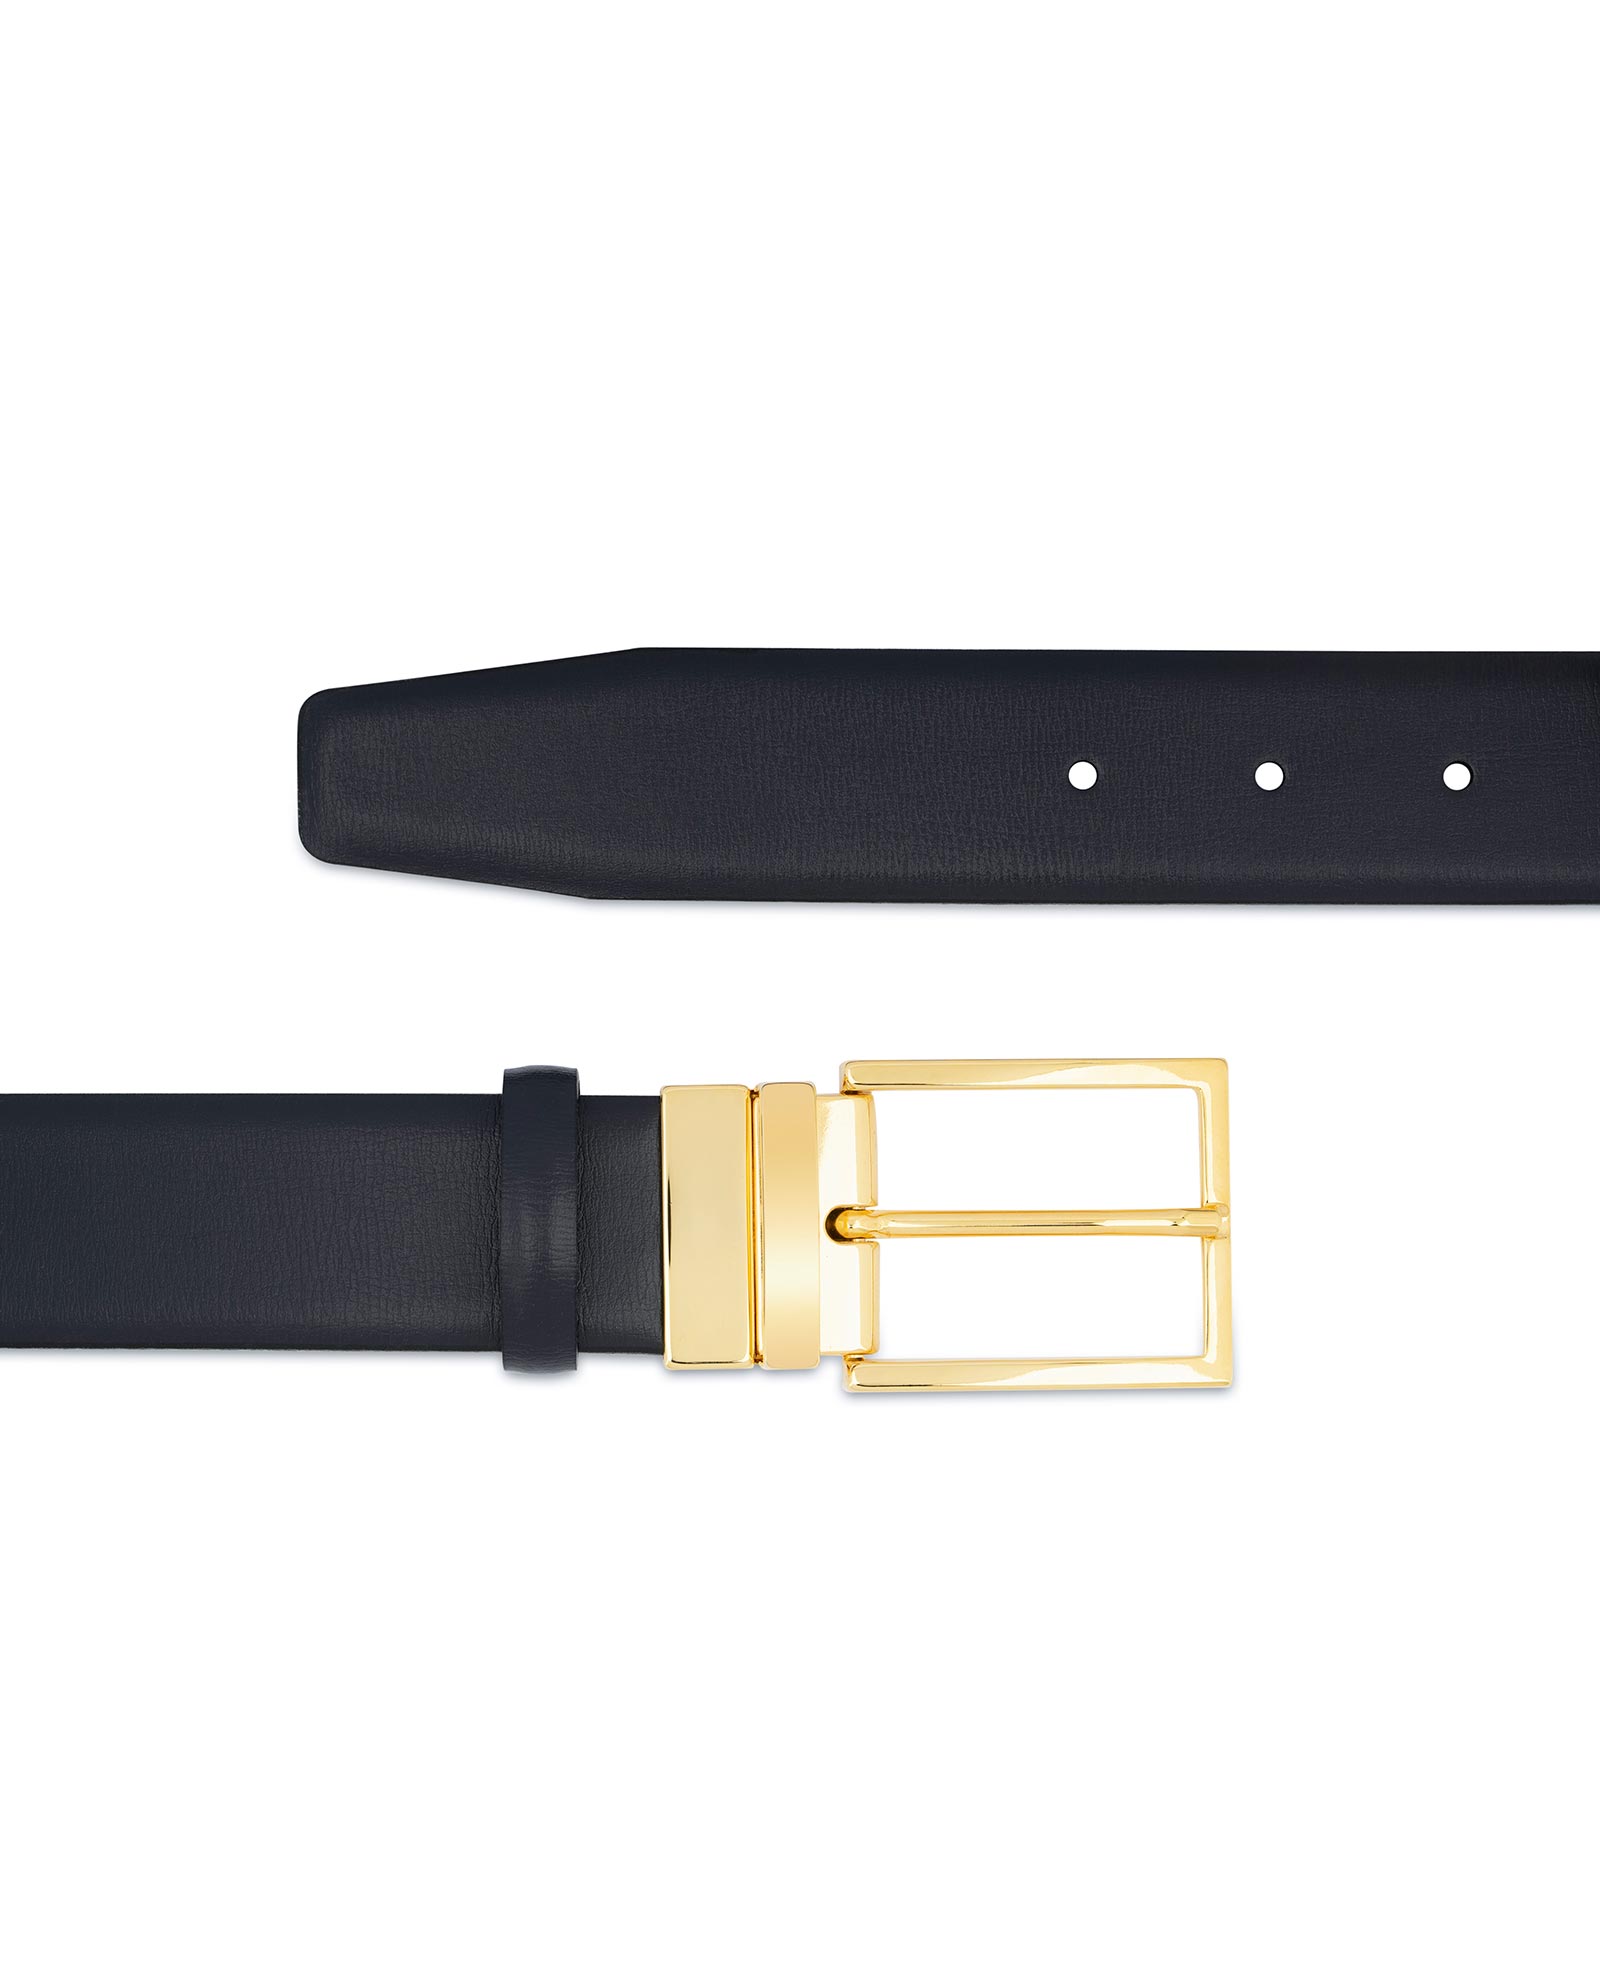 Buy Men's Navy Blue Belt With Gold Buckle | LeatherBeltsOnline.com